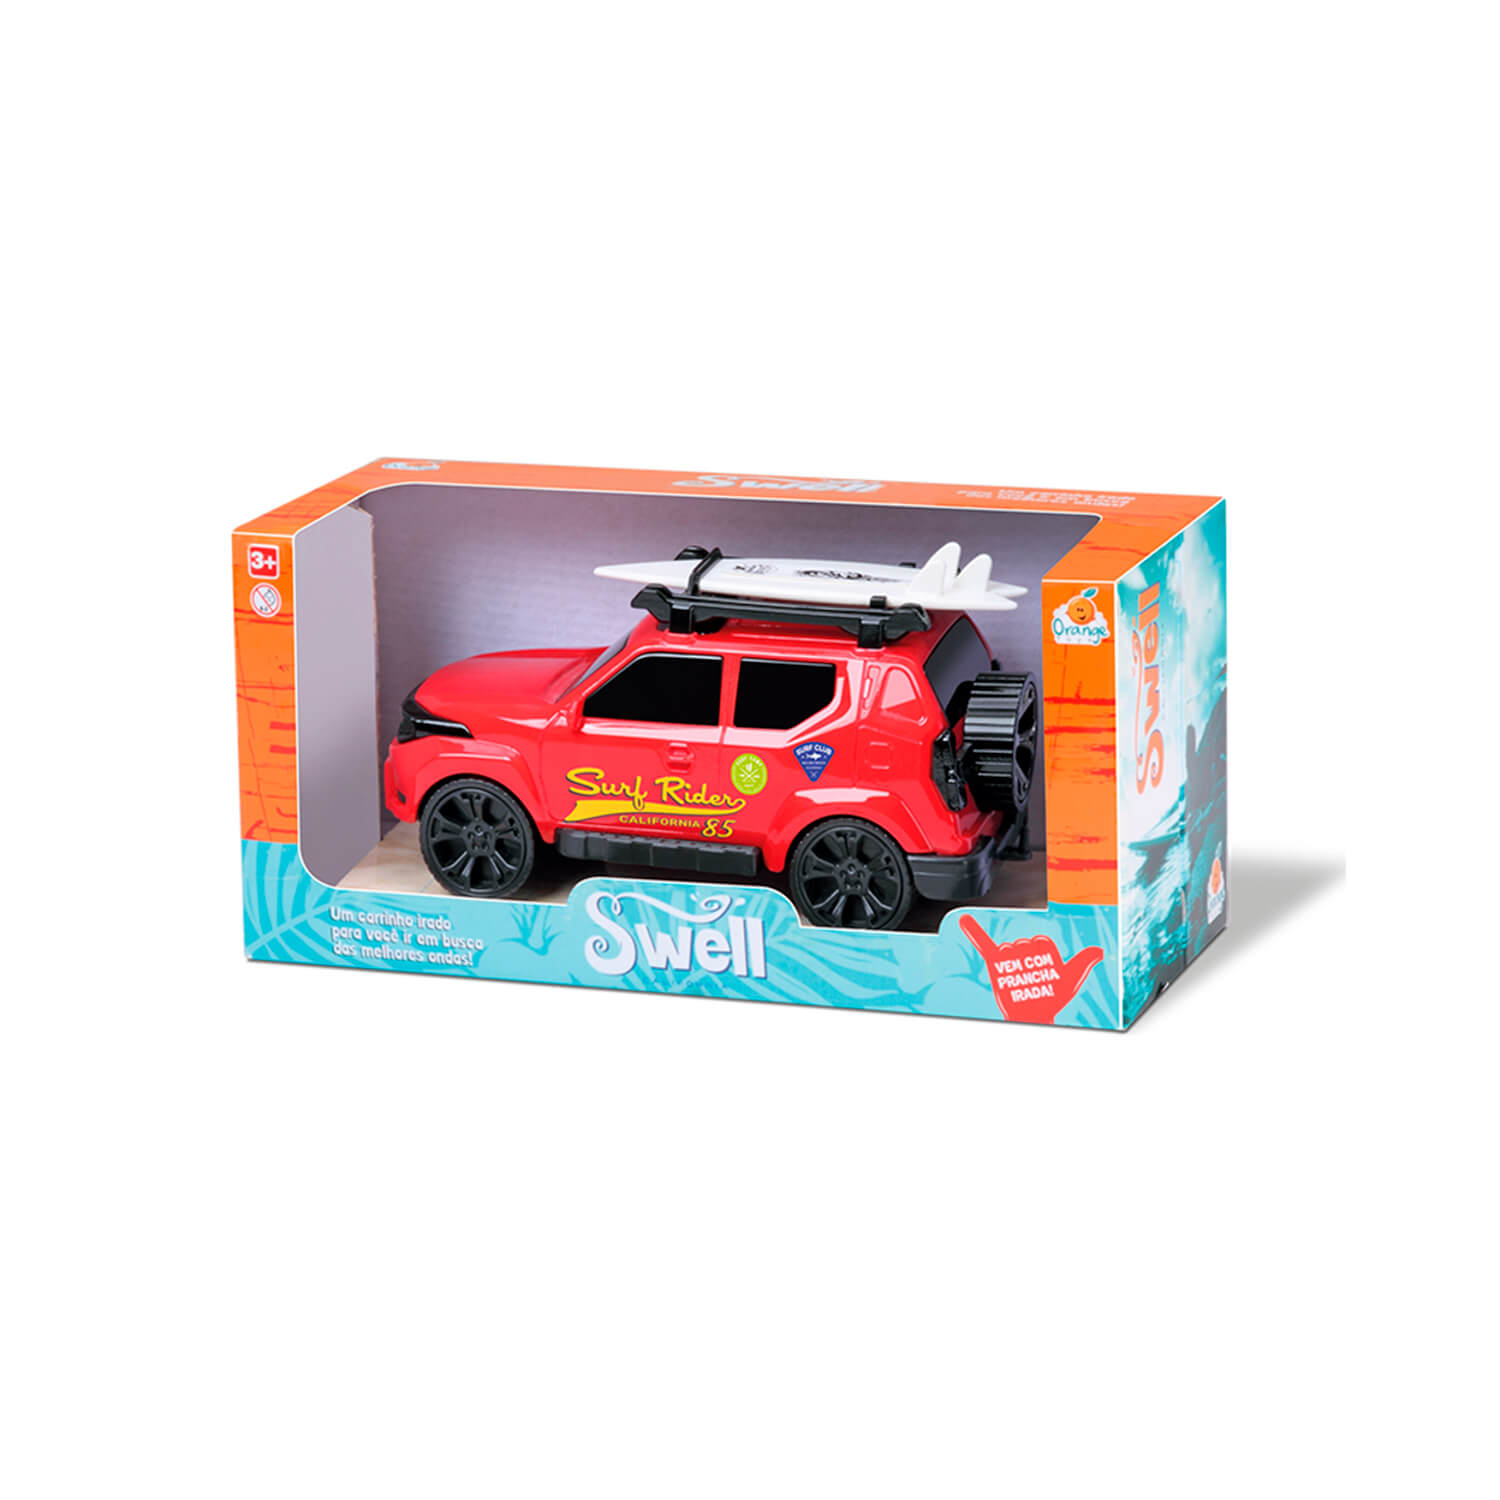 Swell Jeep Orange Toys (1)